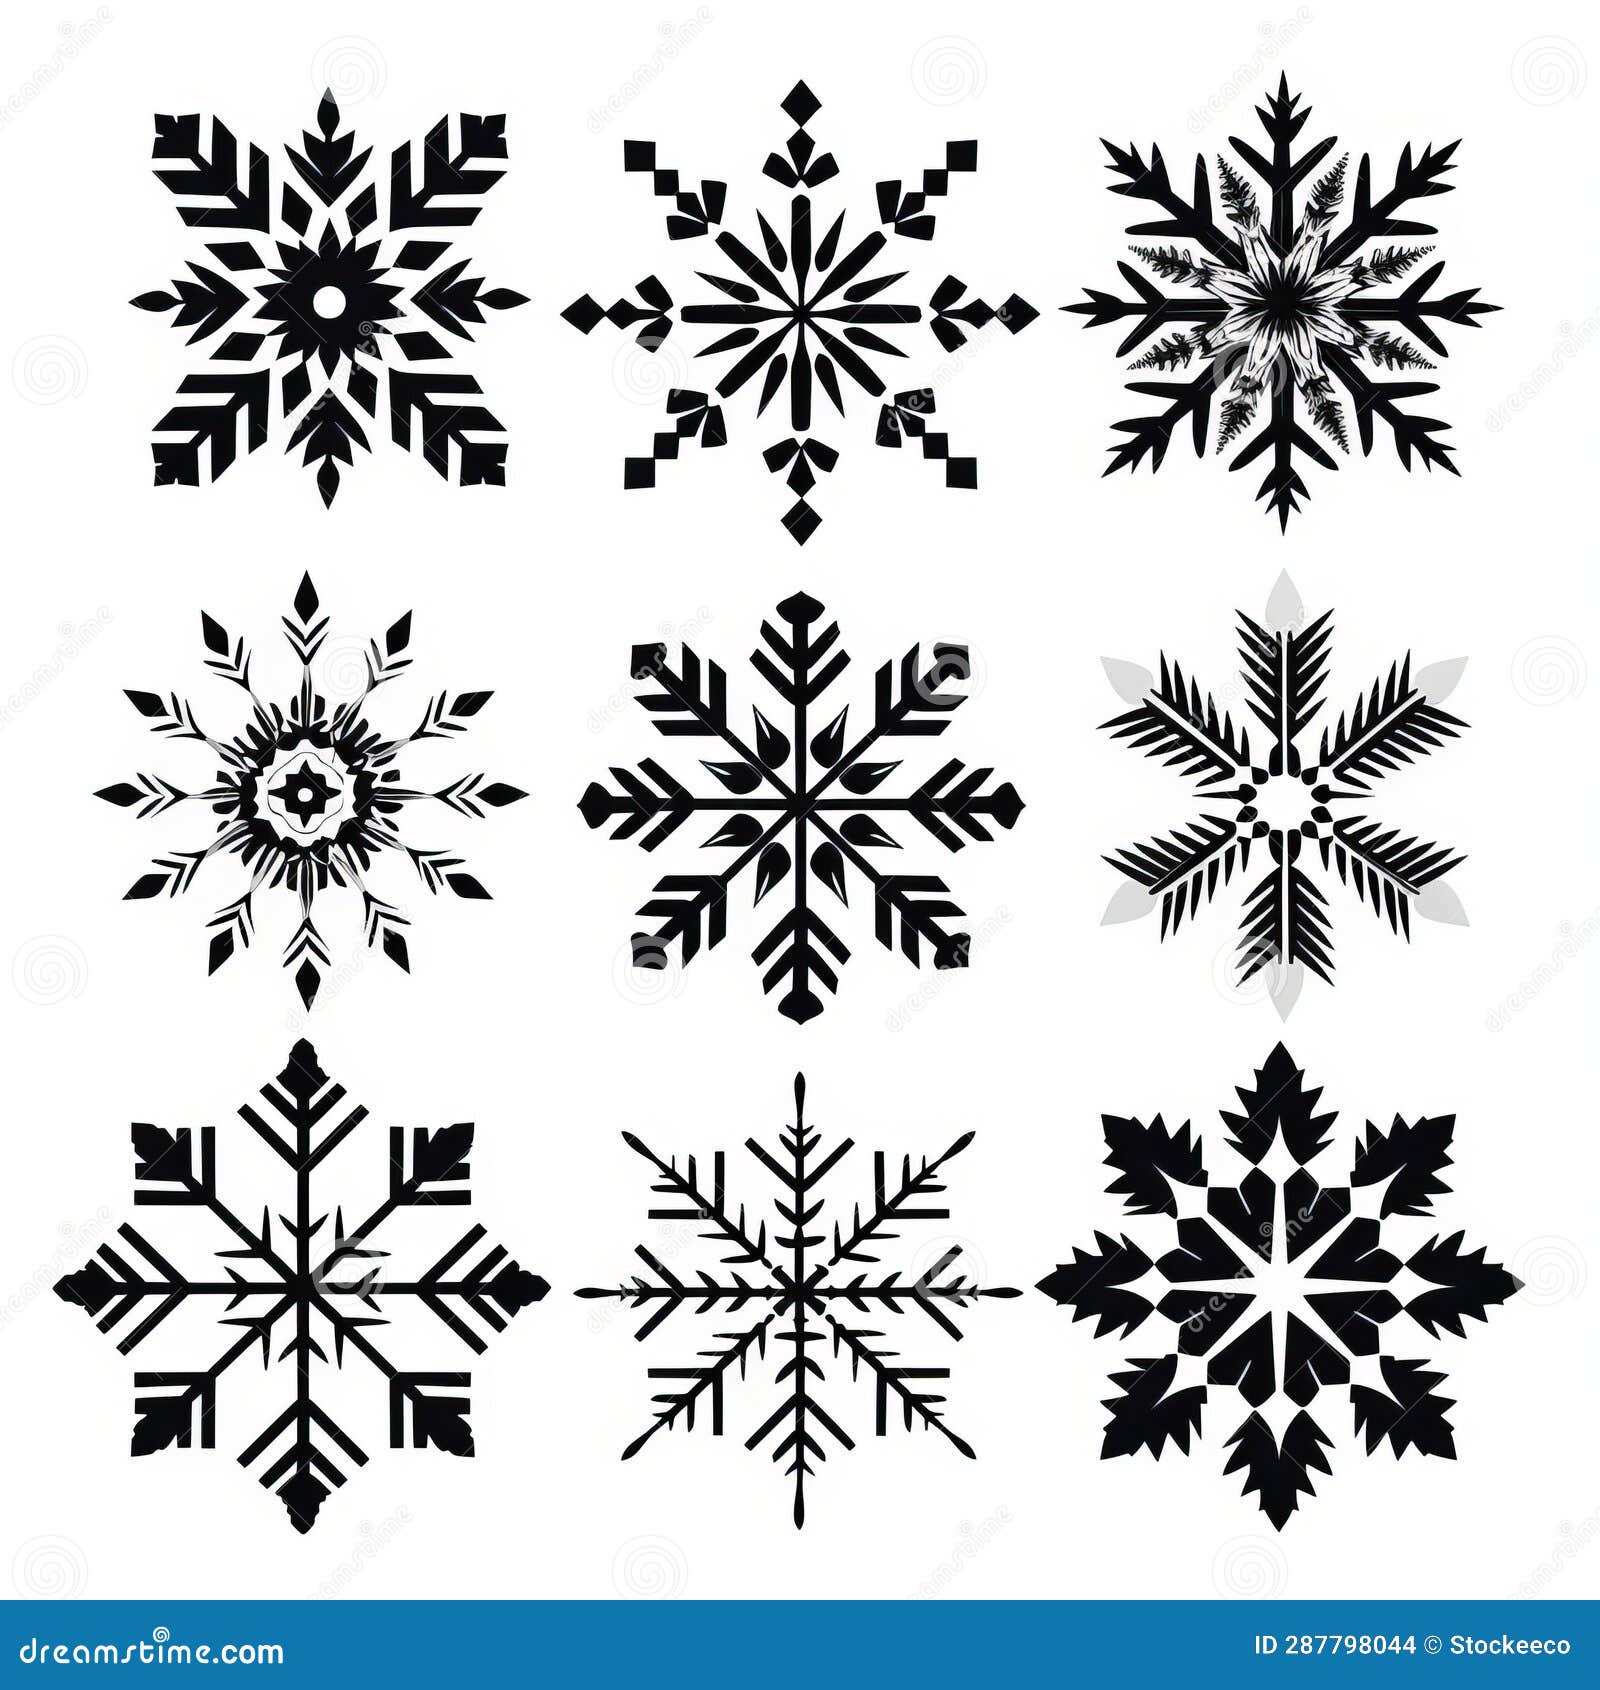 symmetrical black snowflakes  set inspired by john hejduk